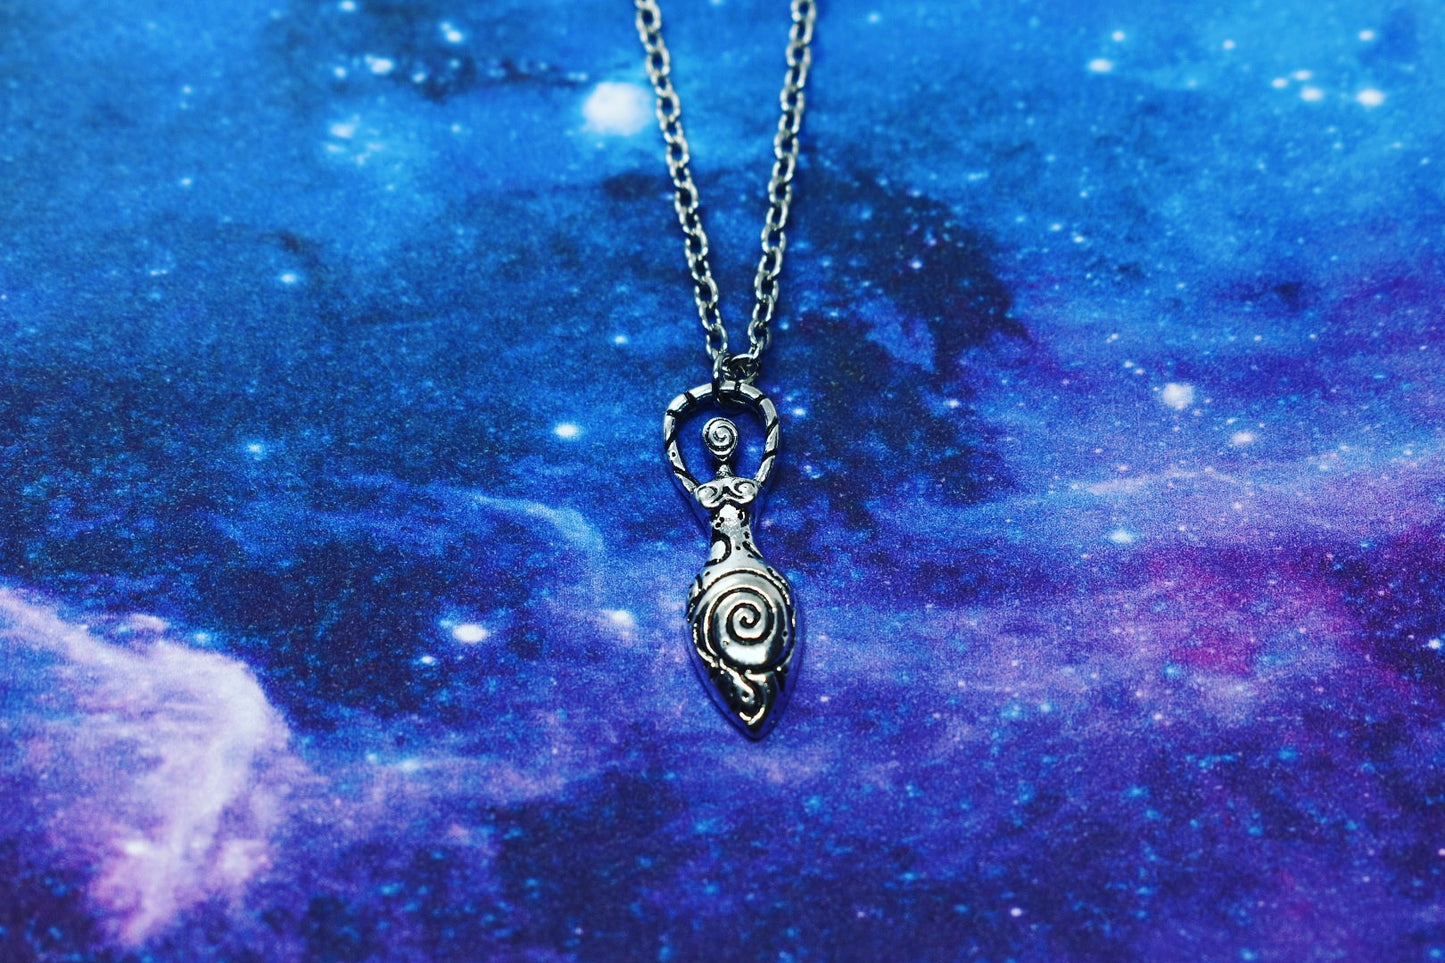 Goddess Pendant Necklace - Stainless Steel Chain Divine Feminine Jewelry